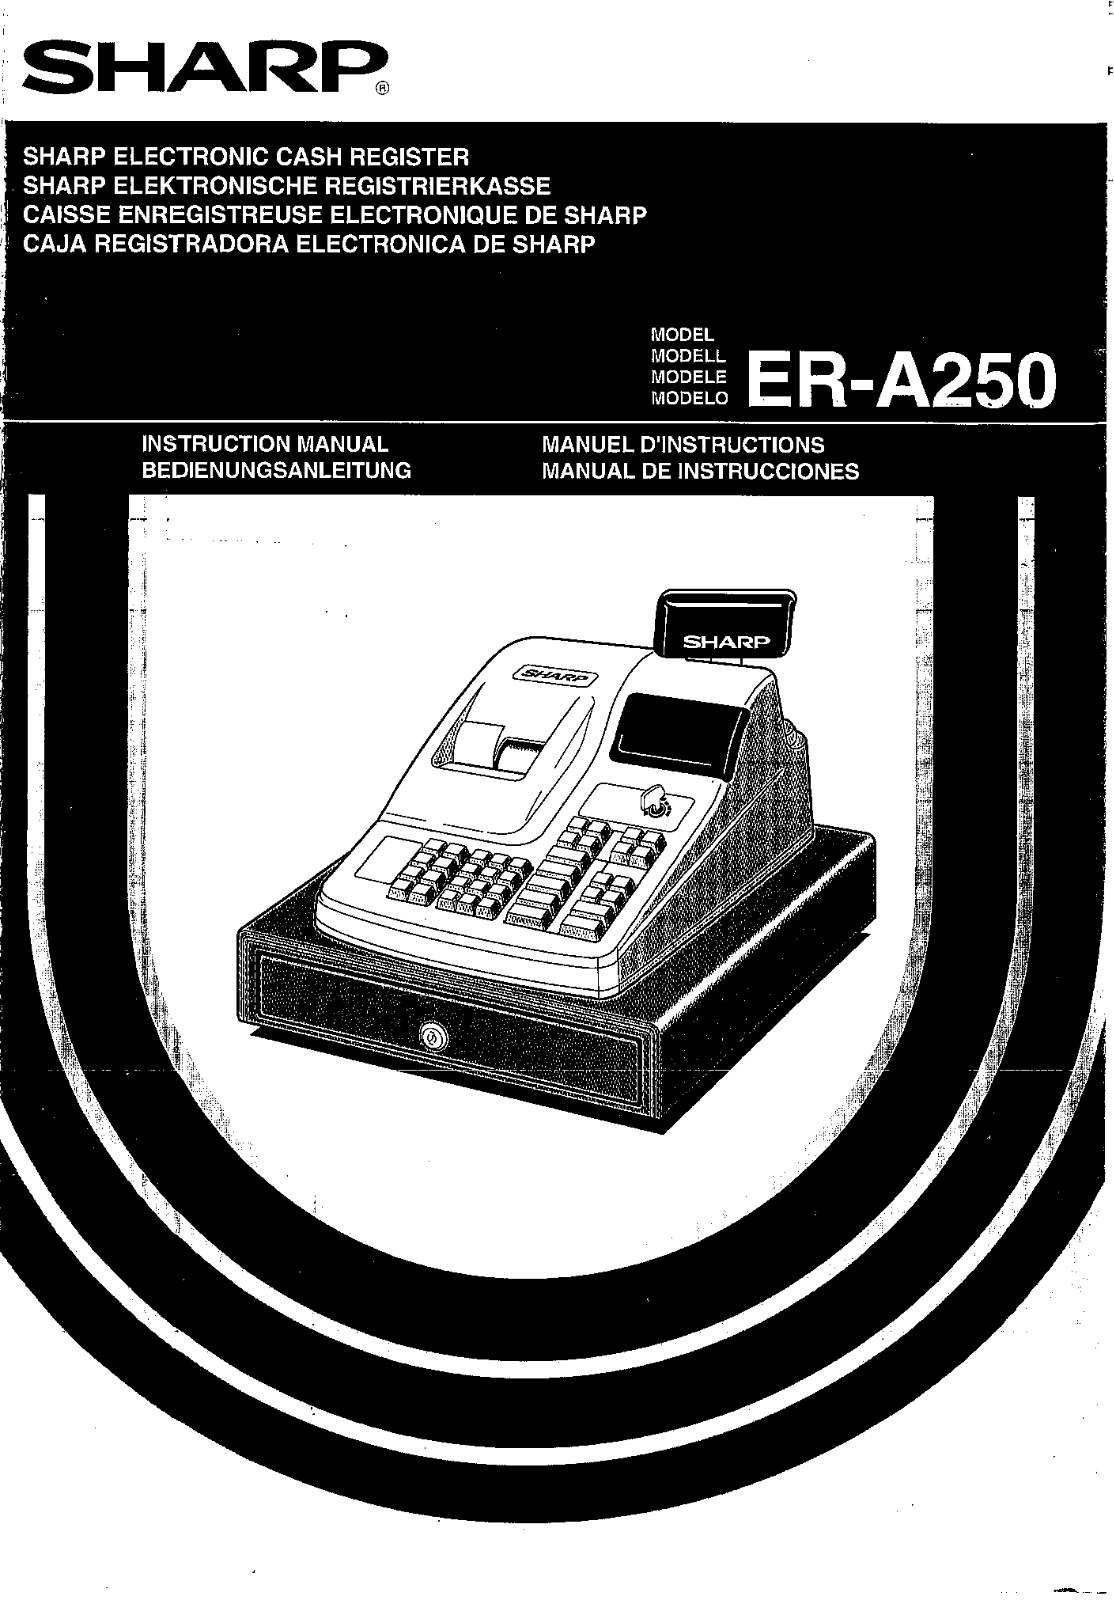 Sharp ER-A250 Manual